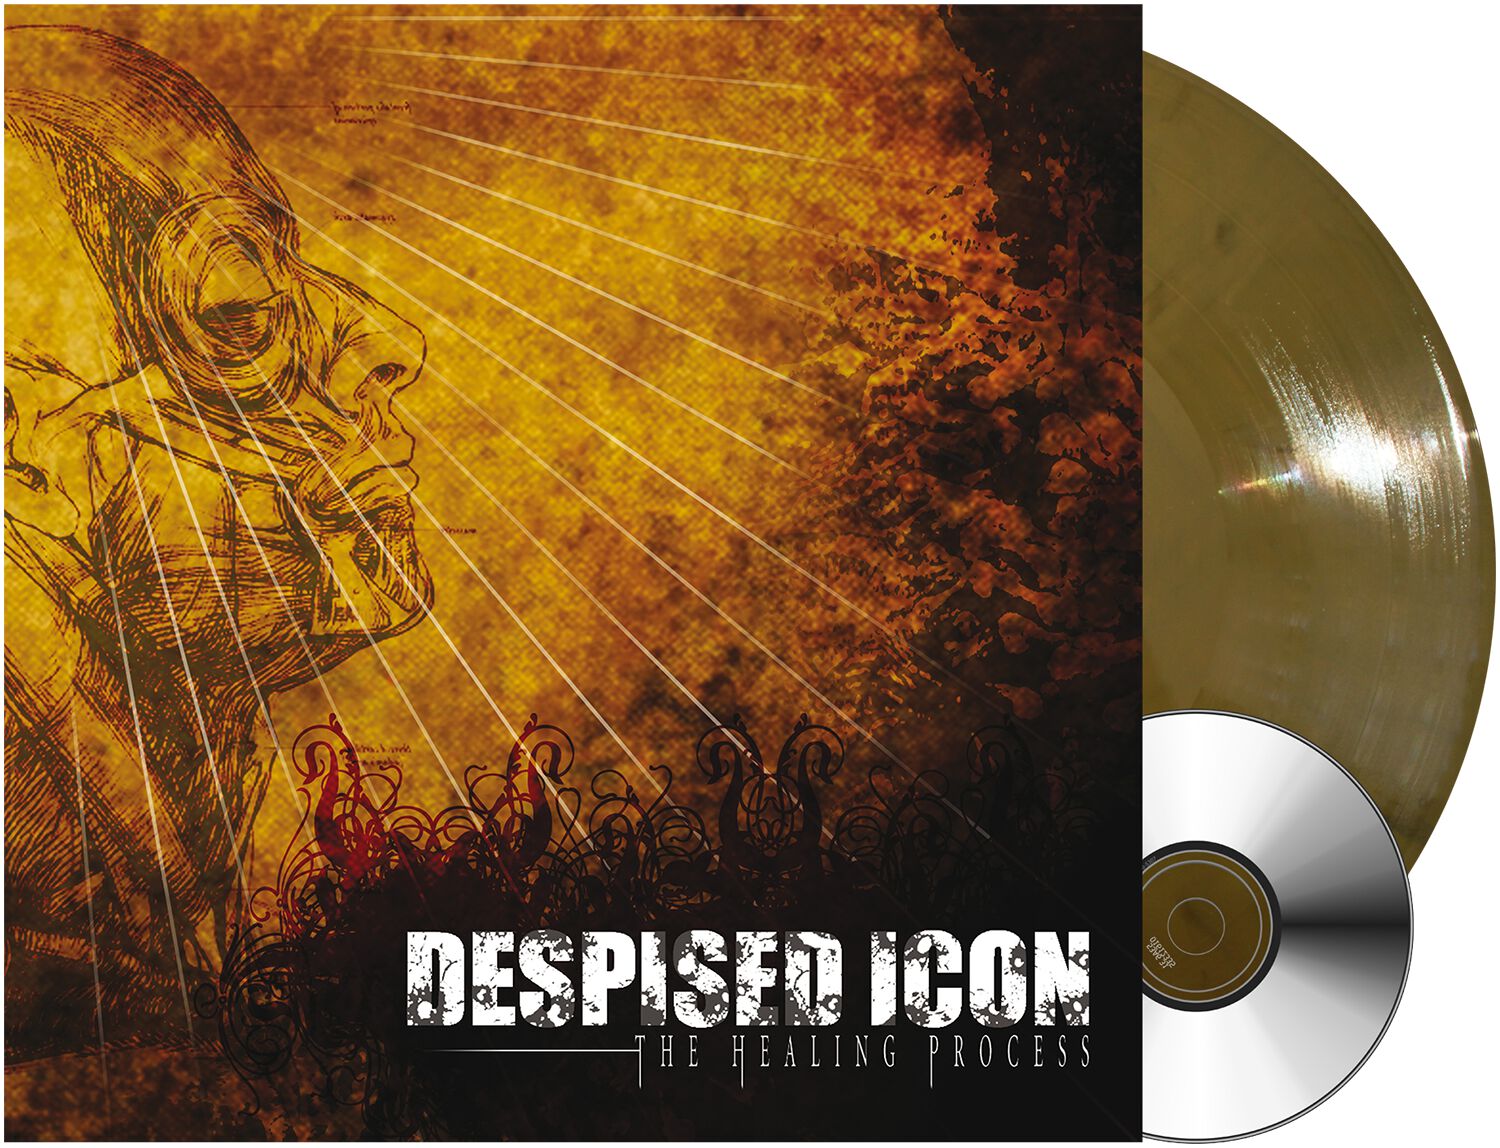 Levně Despised Icon The healing process LP & CD barevný